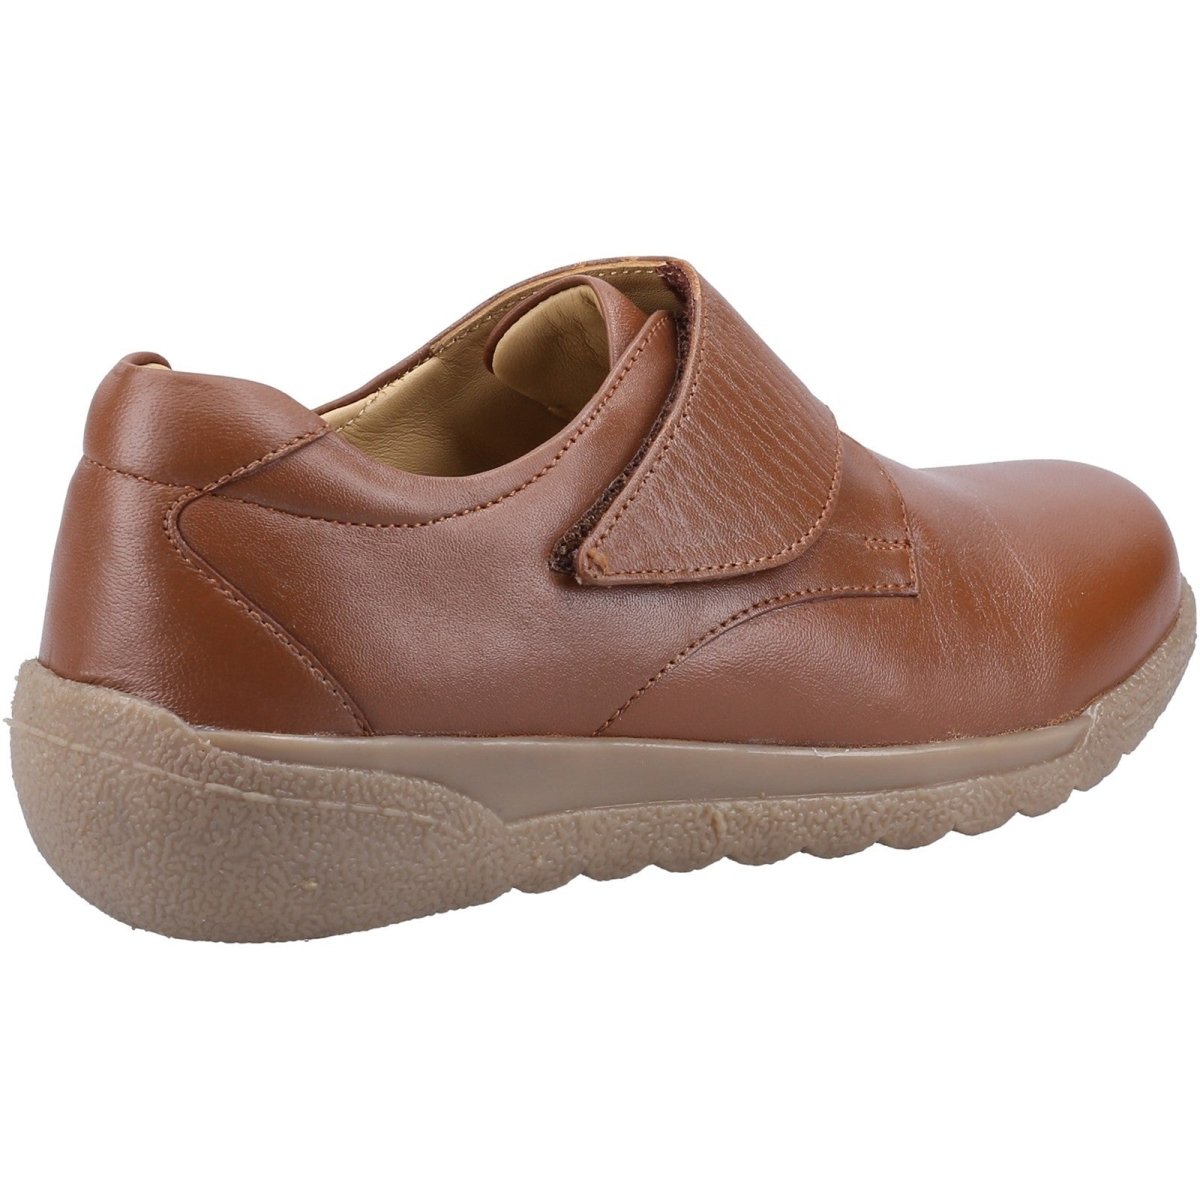 Fleet & Foster Elaine Ladies Waterproof Touch-Fastening Shoes - Shoe Store Direct